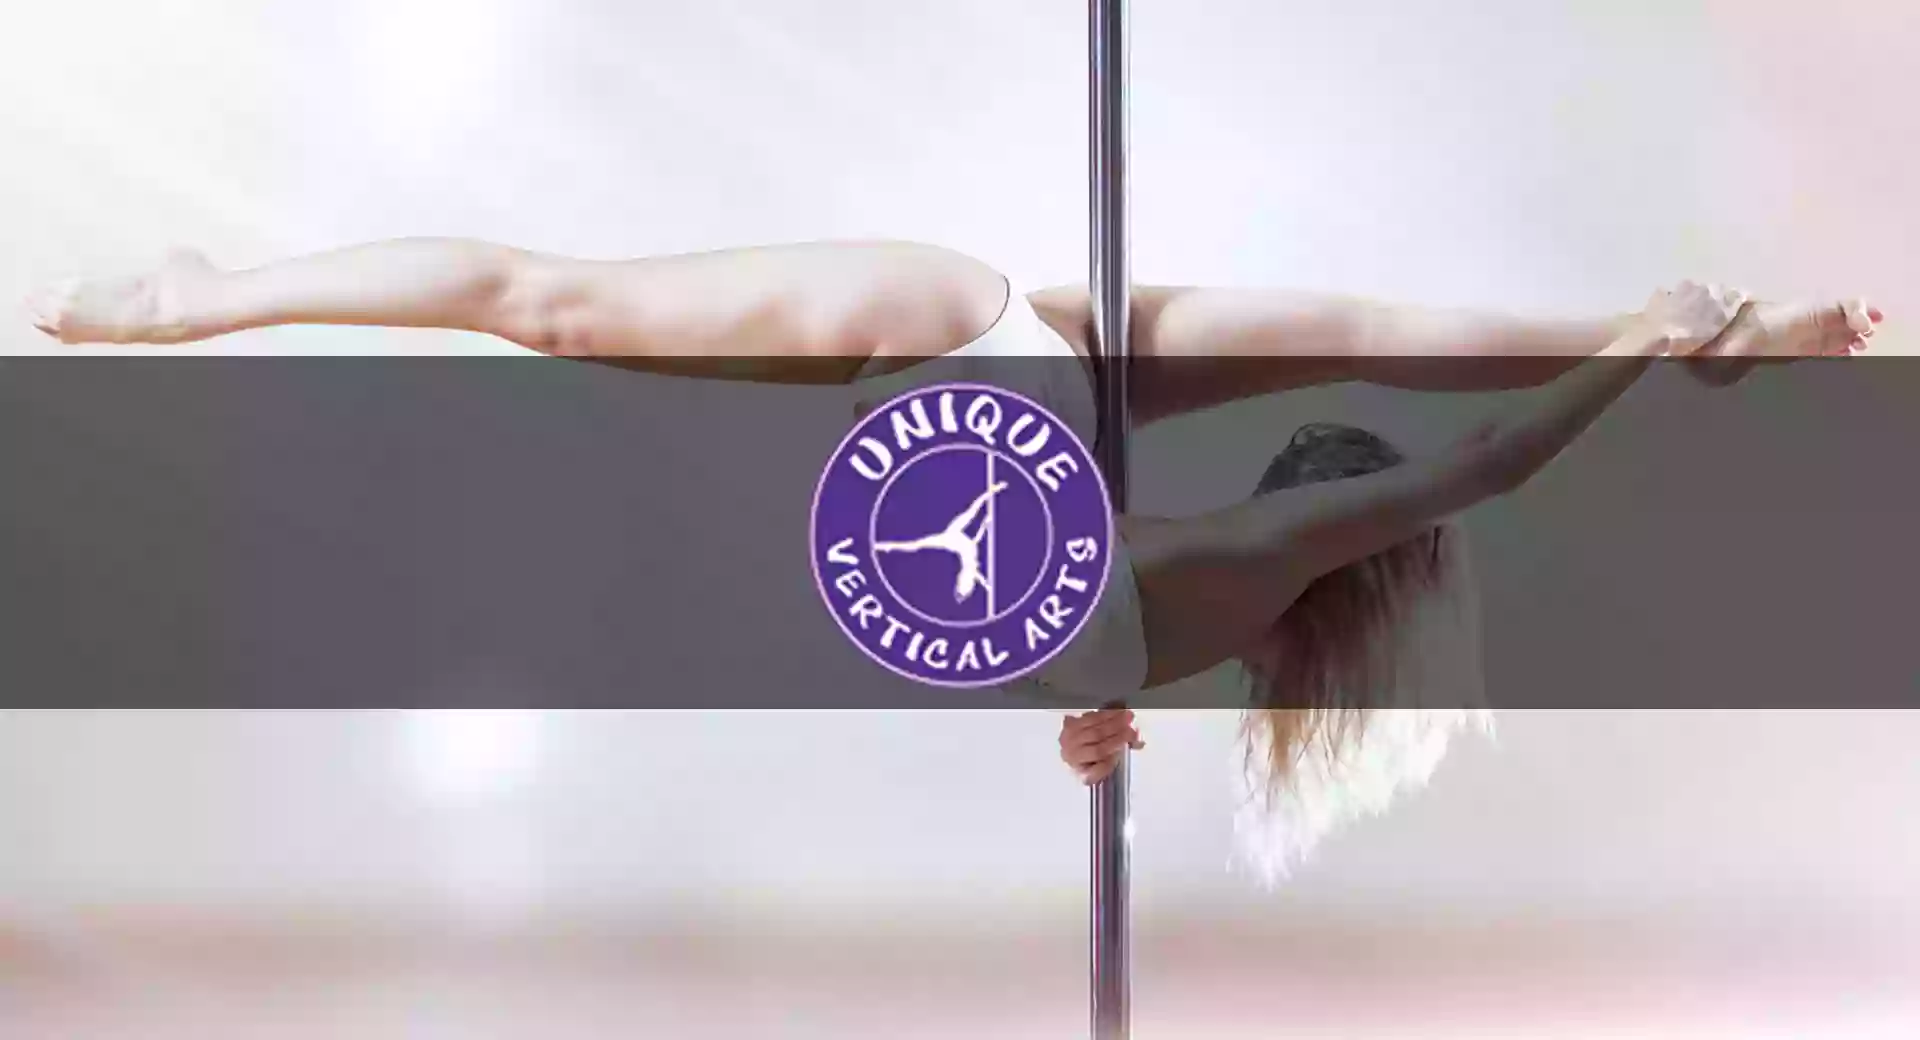 Unique Vertical Arts - Pole Dance, Aerial Hoop, Aerial Silks